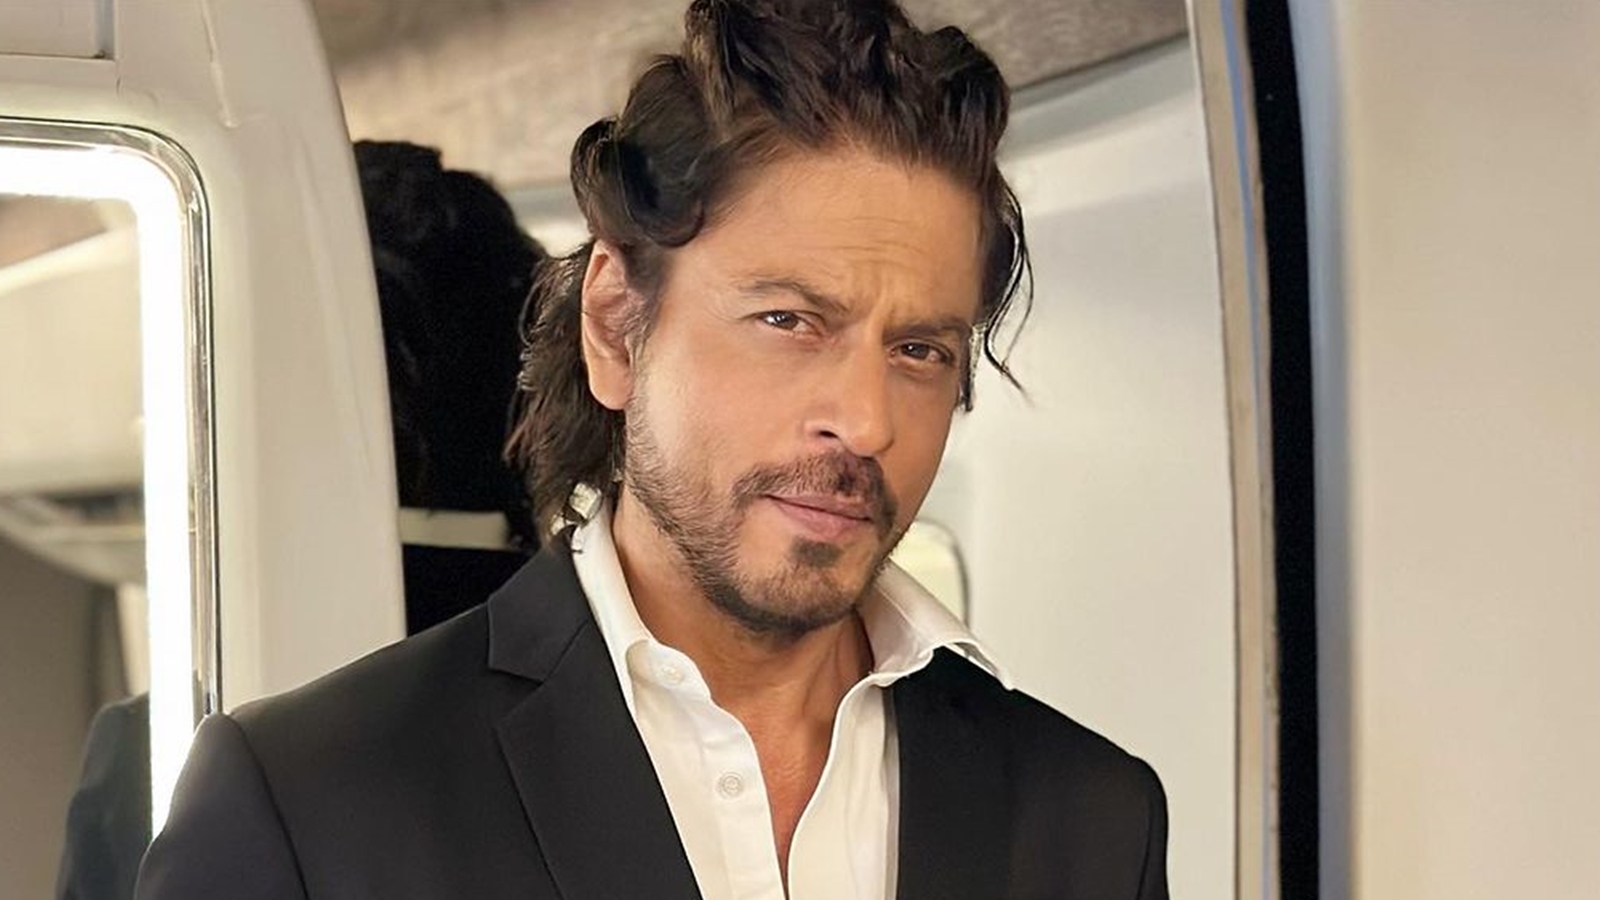 Trendiest hairstyle poll: Shah Rukh Khan beats Salman Khan and Fawad Khan |  TheHealthSite.com